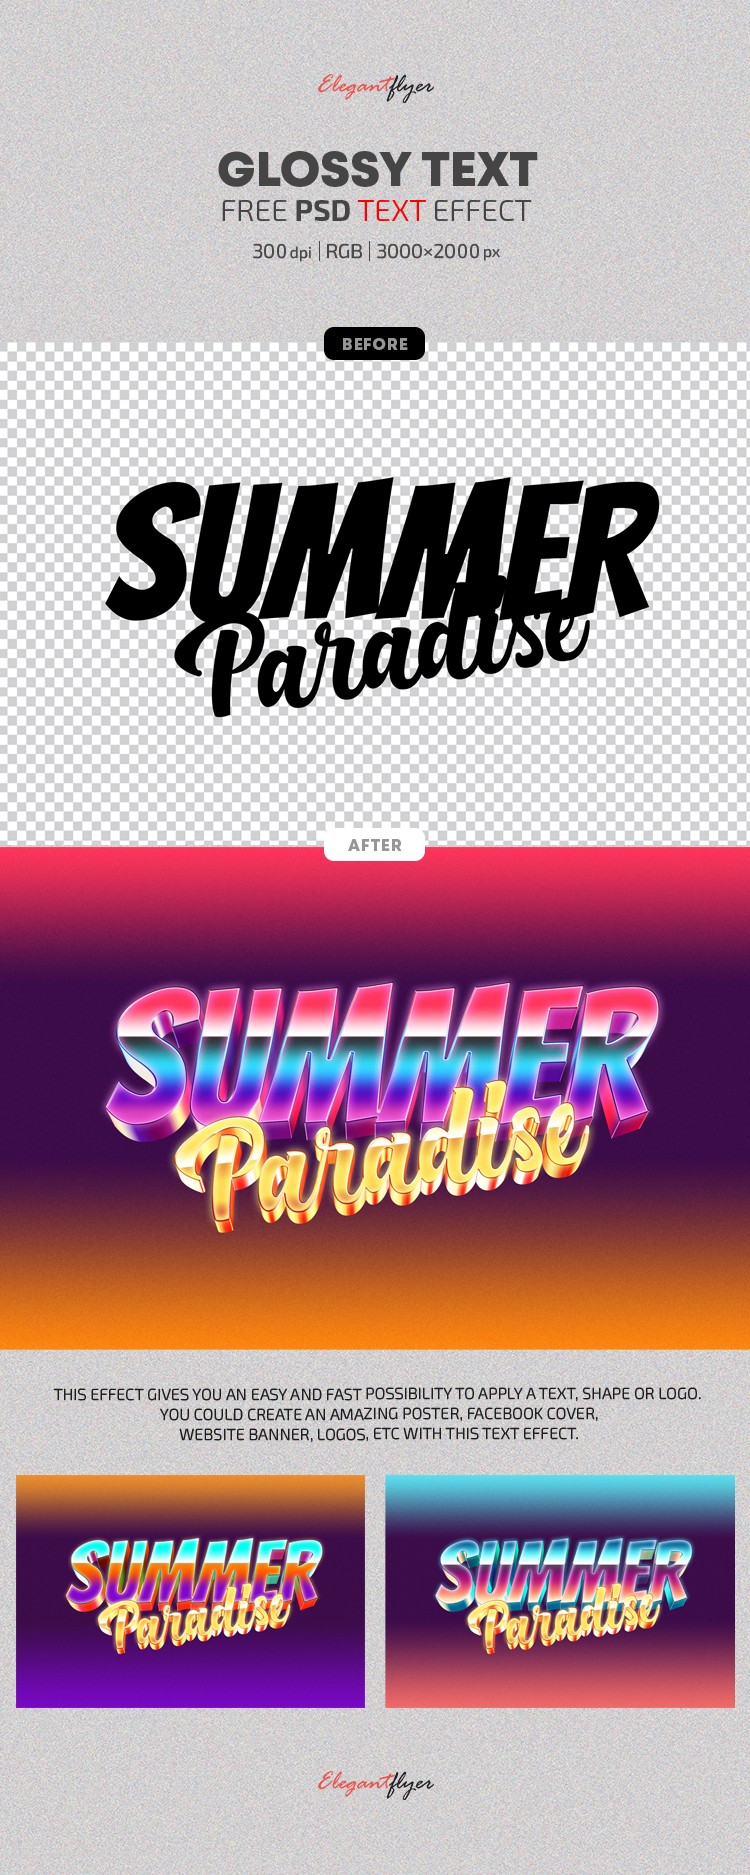 Effets de texte Paradise d'été by ElegantFlyer